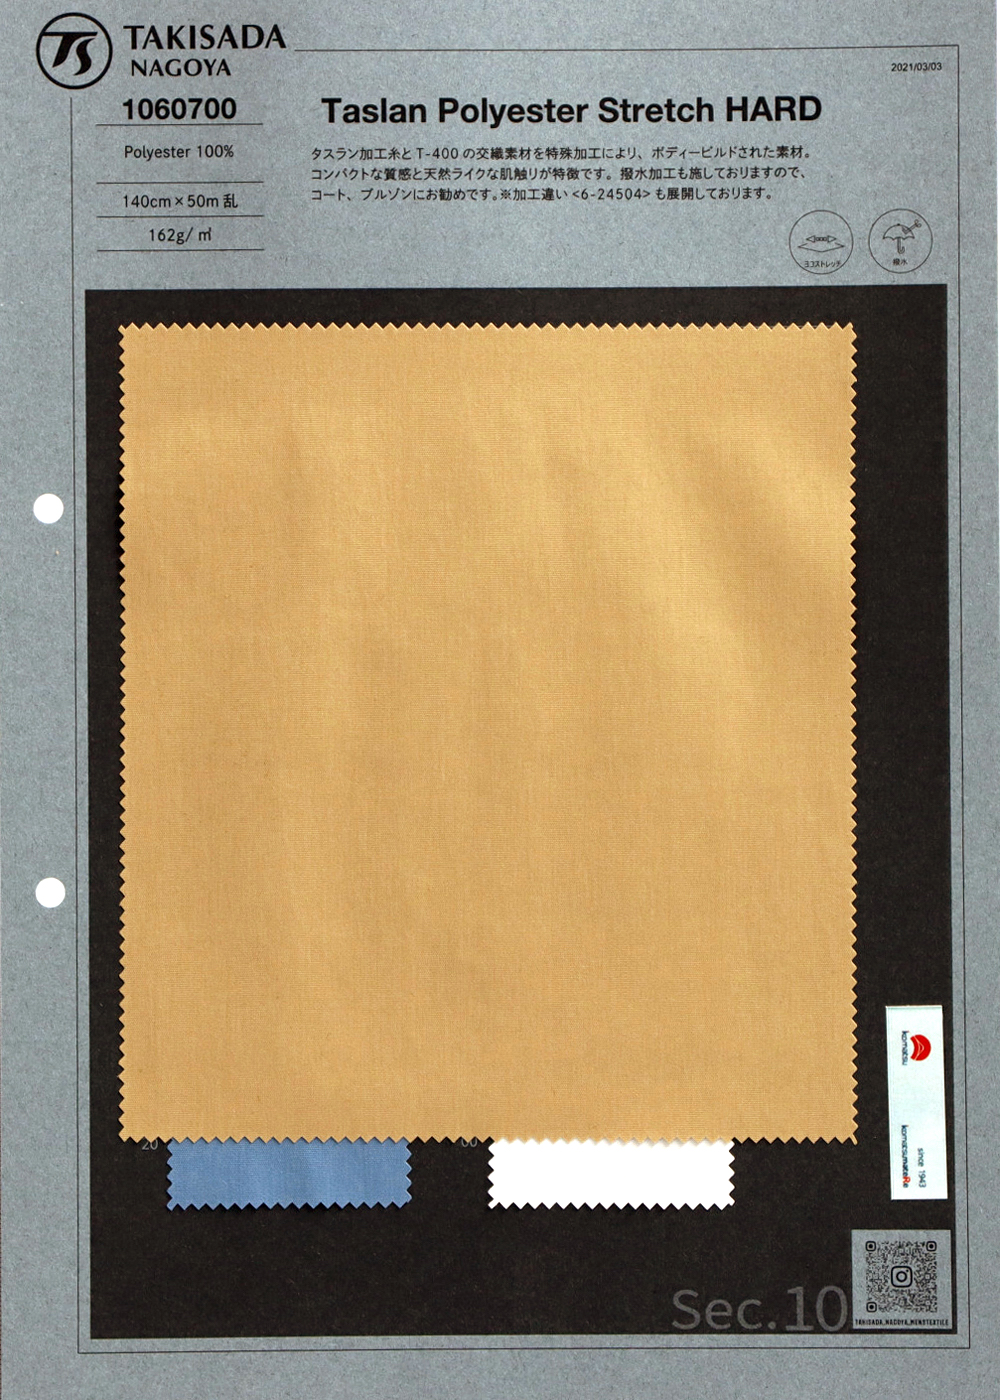 1060700 Tas LAMPO Reester Stretch Hard Processing[Textile / Fabric] Takisada Nagoya